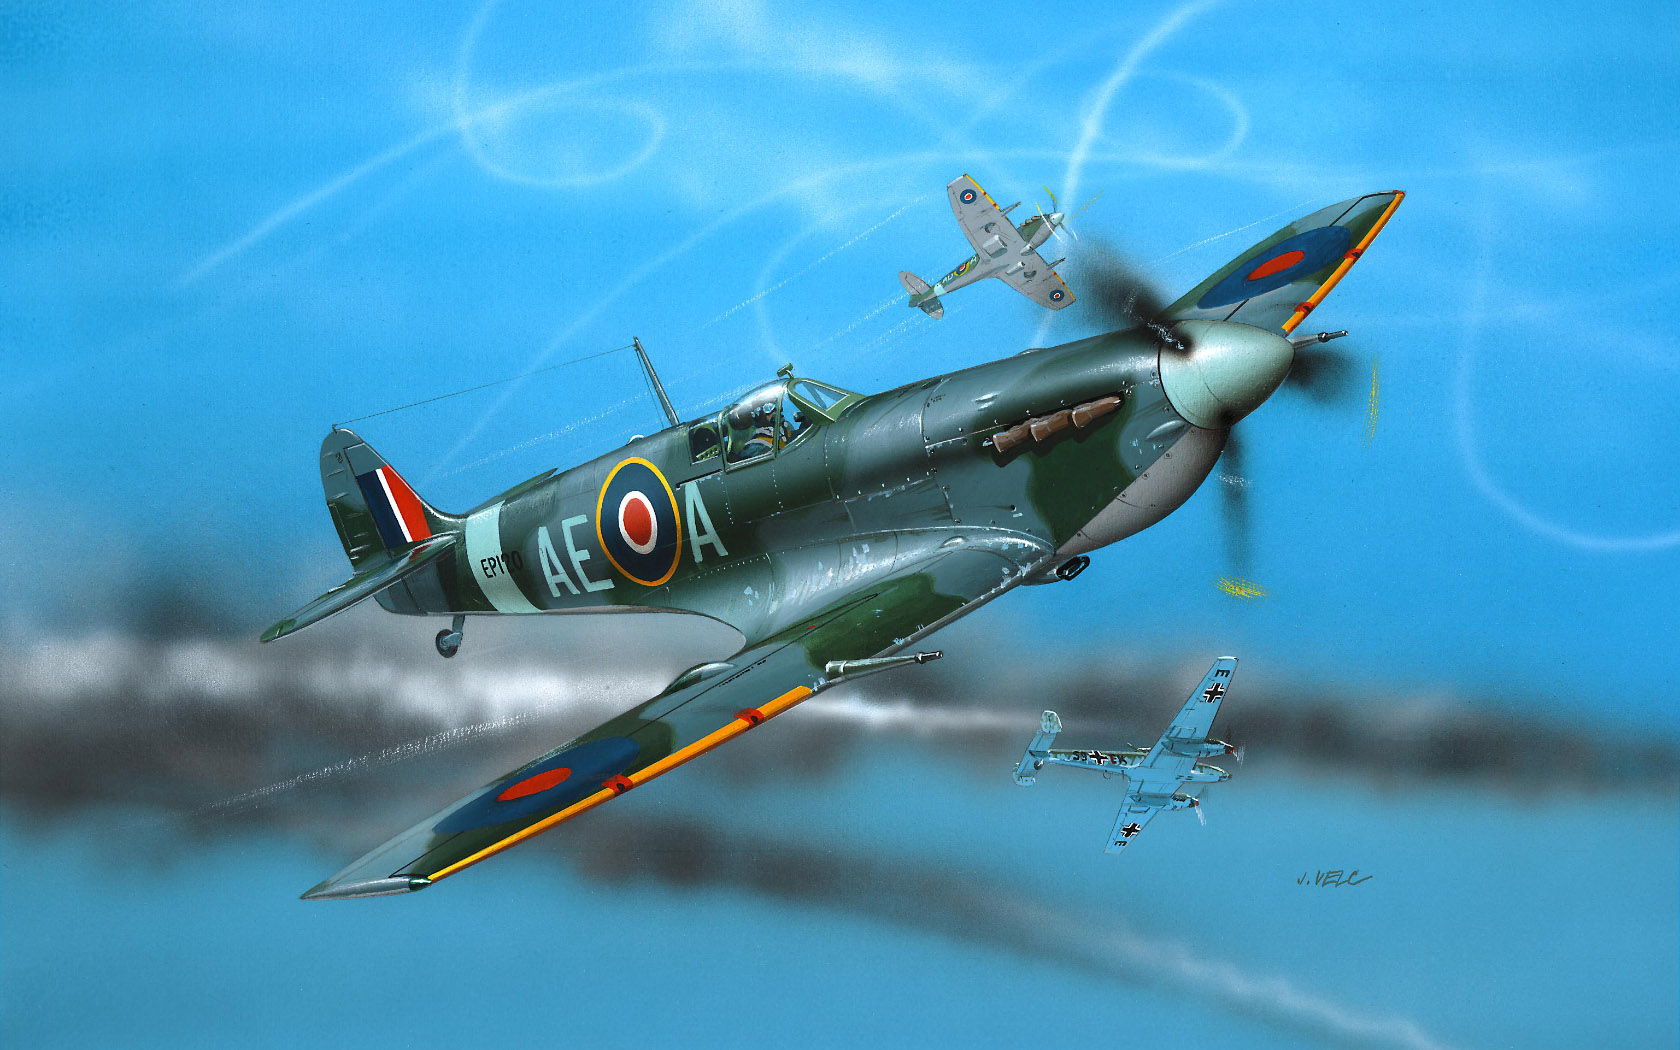 General 1680x1050 aircraft war flying sky military smoke military vehicle artwork Supermarine Spitfire Royal Air Force World War II dogfight